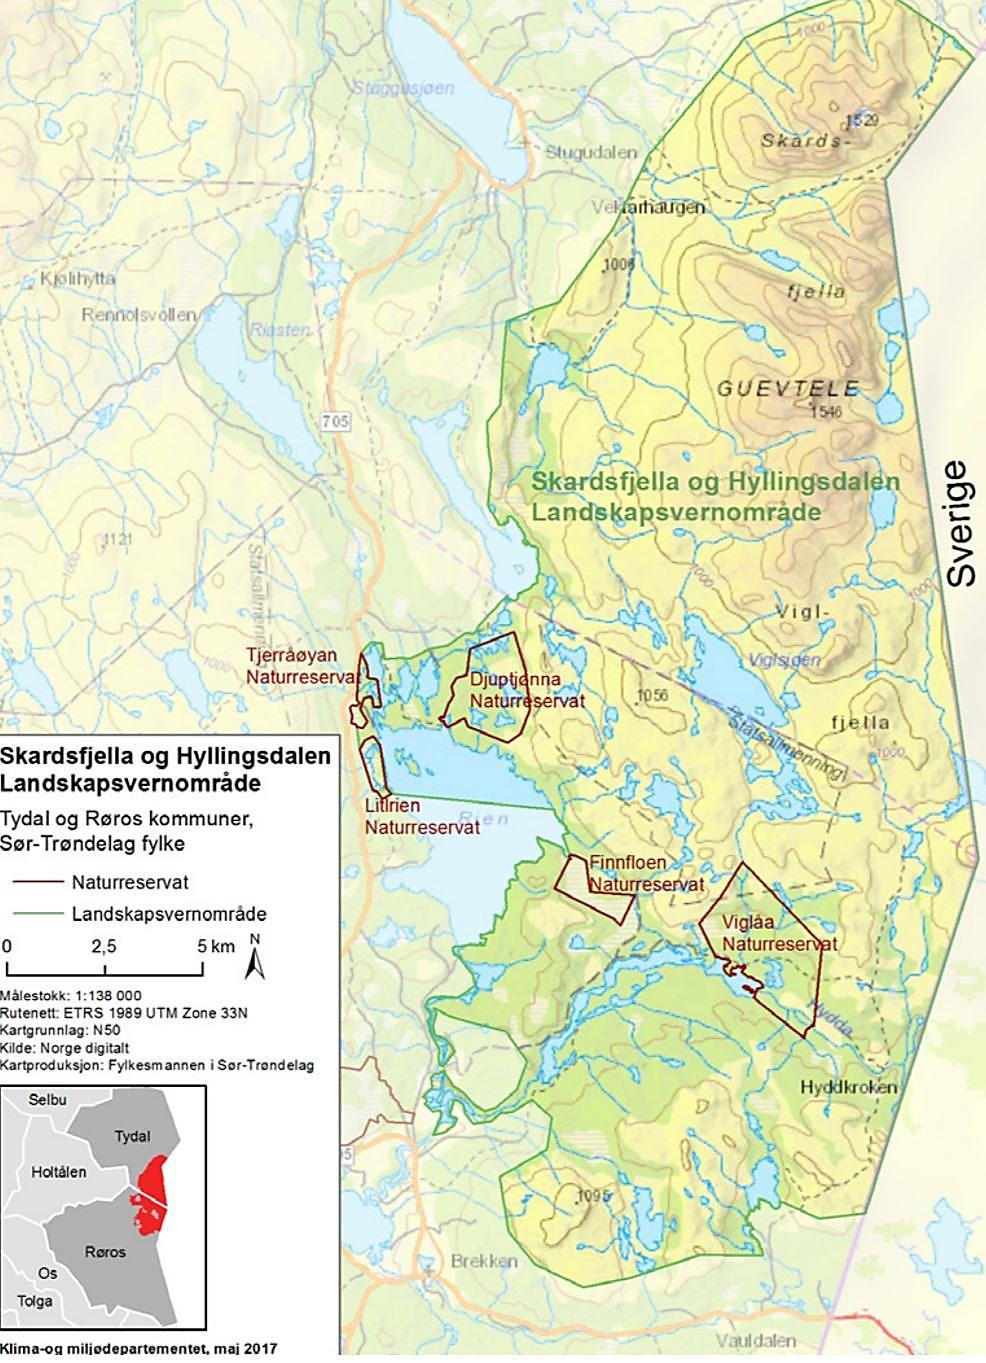 Det er fem naturreservater som ligger innenfor grensene til Skardsfjella og Hyllingsdalen landskapsvernområde: Djuptønna, Litlrien, Tjerråøyan, Viglåa og Finnfloen.